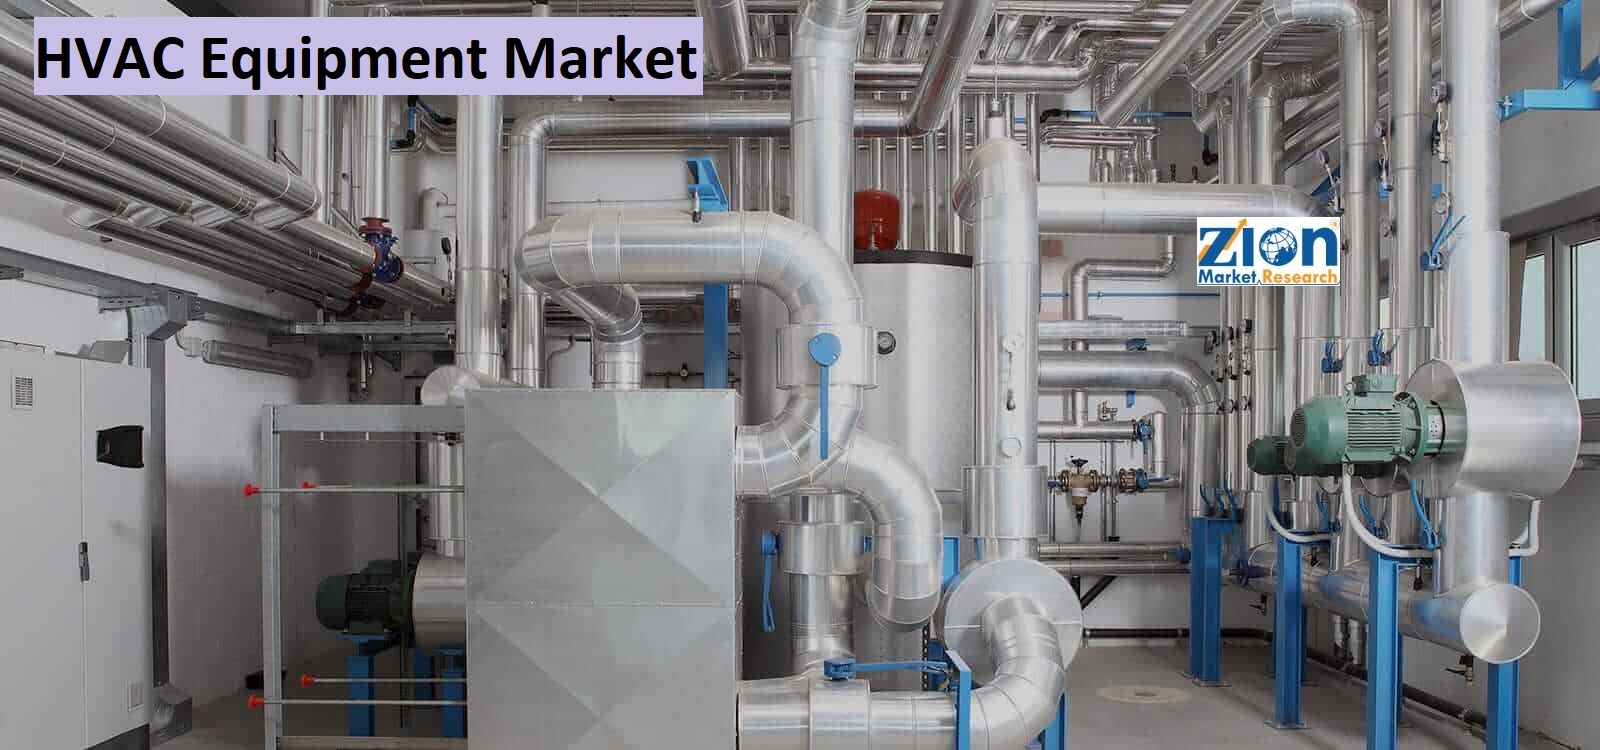 Global HVAC Equipment Market